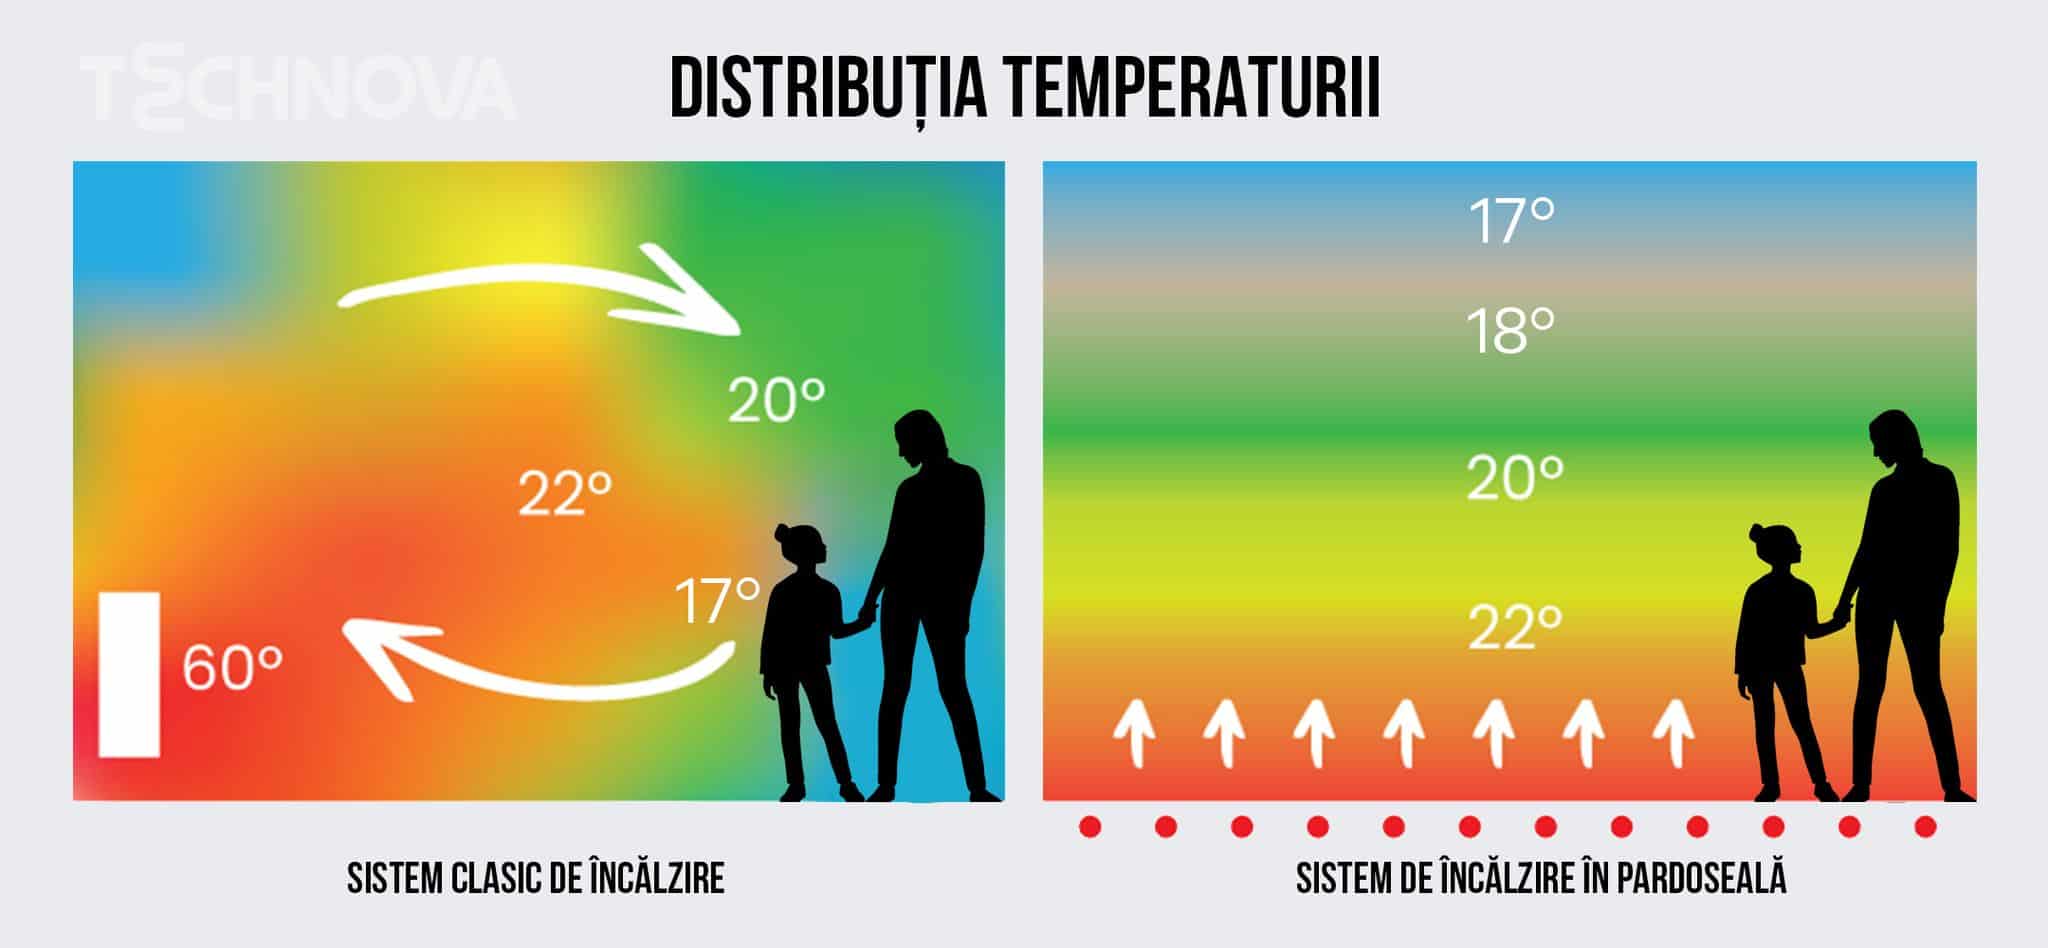 distributia temperaturii - incalzire in pardoseala